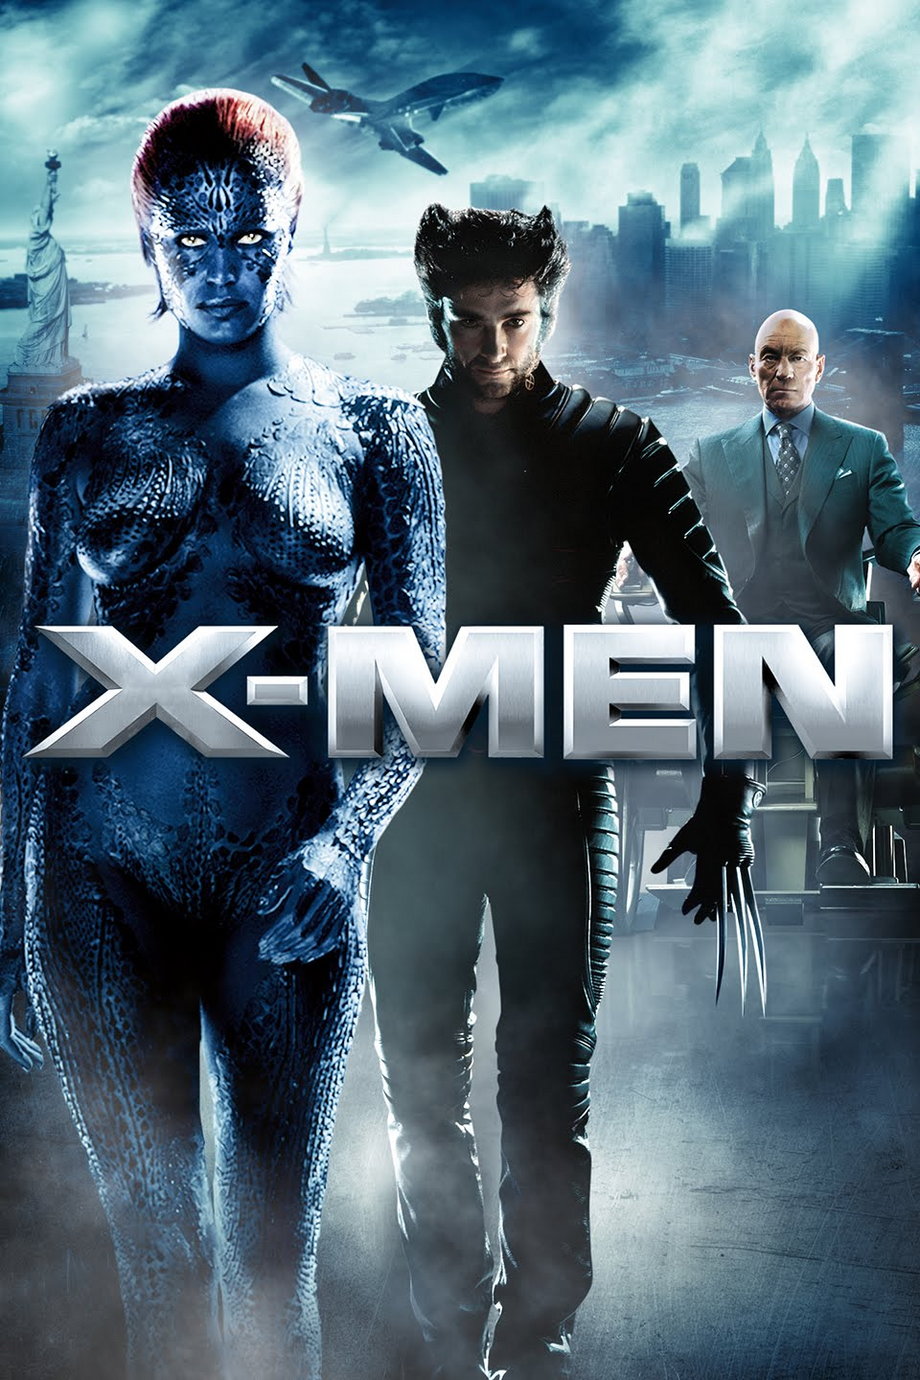 Plakat z filmu "X-Men"